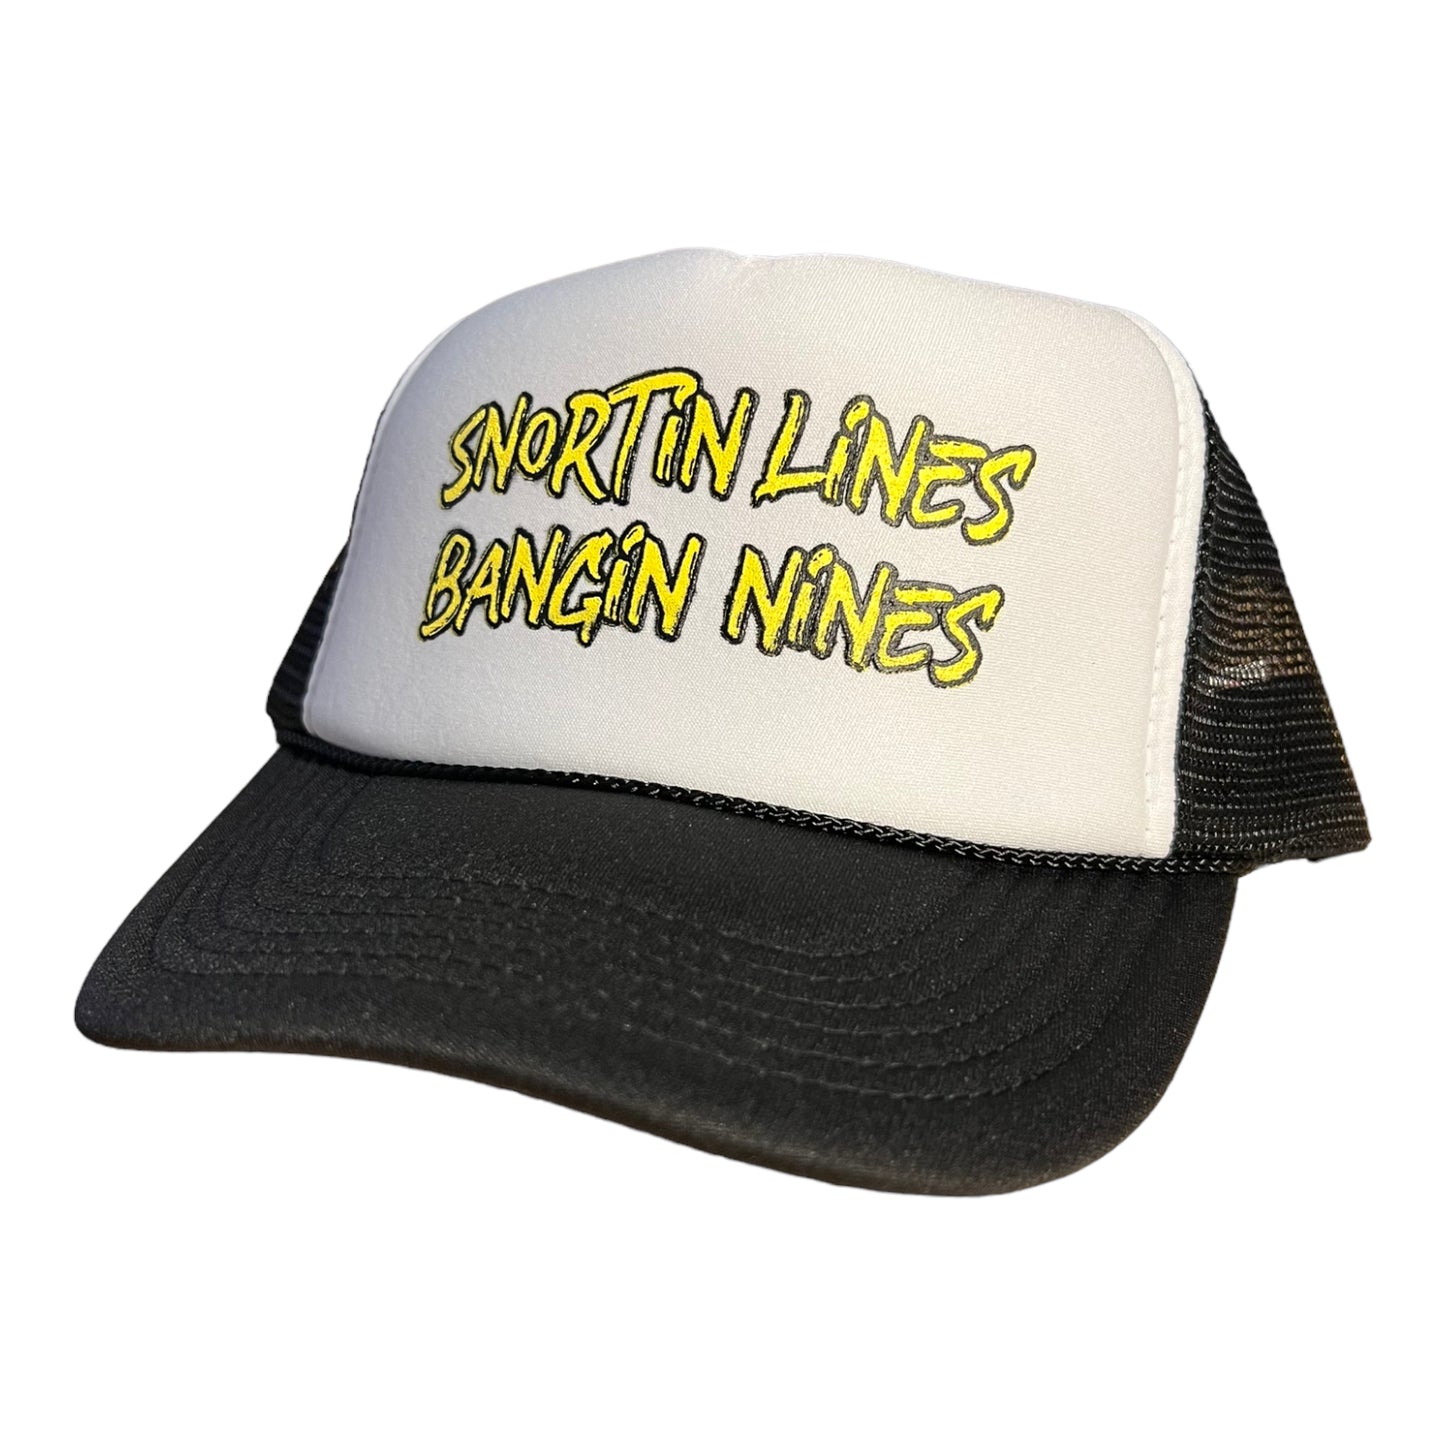 Snortin Lines Bangin Nines Trucker Hat Funny Trucker Hat Black/White